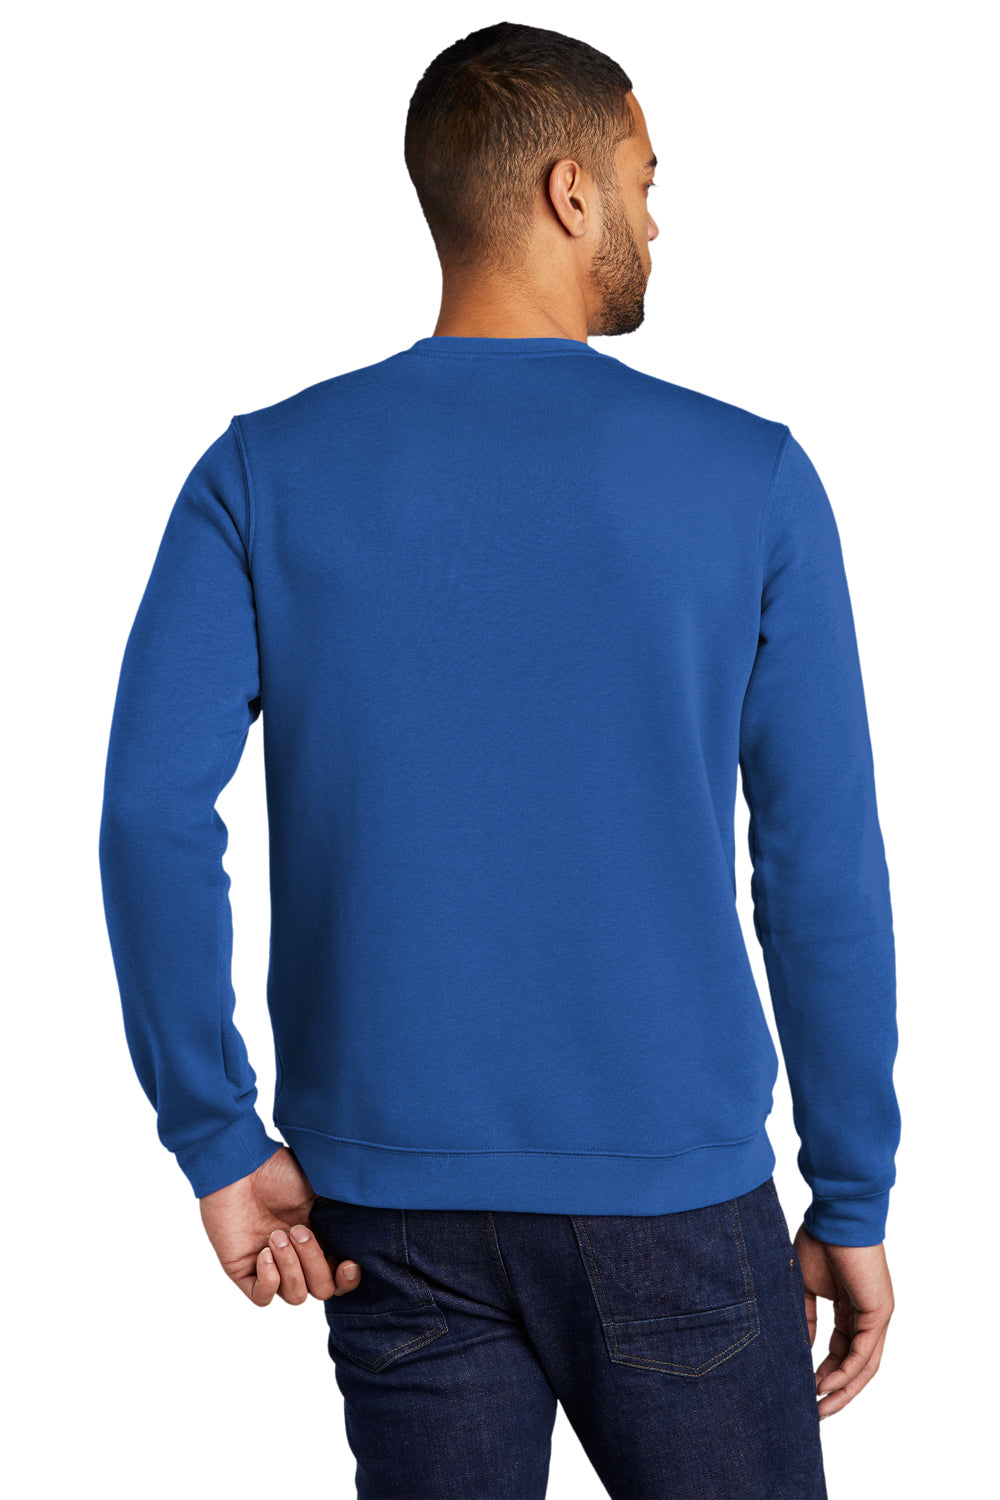 Nike CJ1614 Mens Club Fleece Crewneck Sweatshirt Royal Blue Model Back